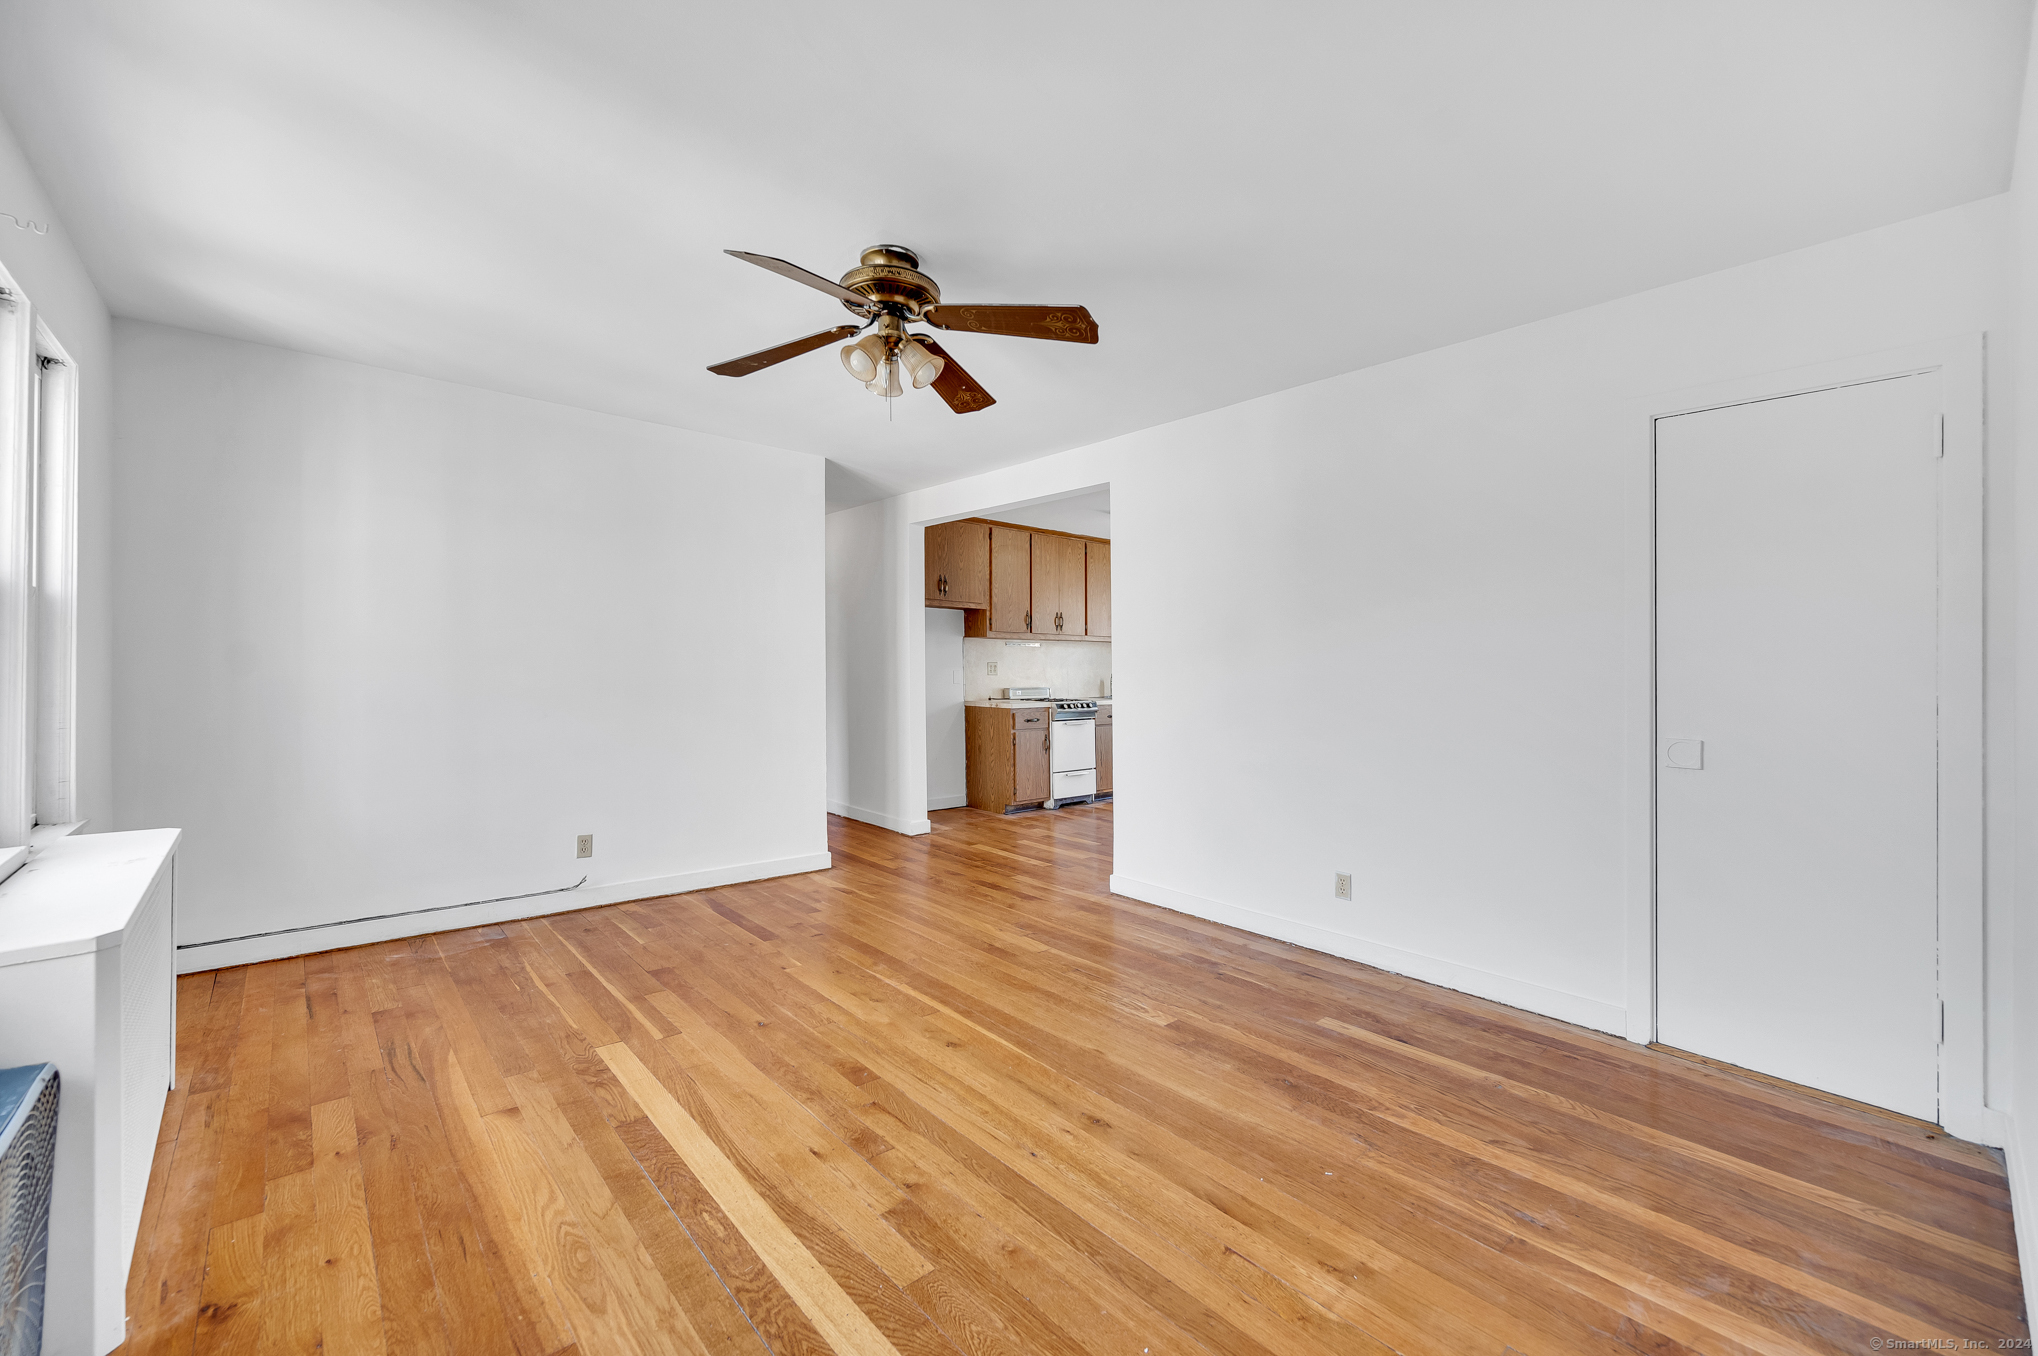 Property for Sale at 325 North Bishop Avenue 93-27, Bridgeport, Connecticut - Bedrooms: 3 
Bathrooms: 1 
Rooms: 6  - $75,000